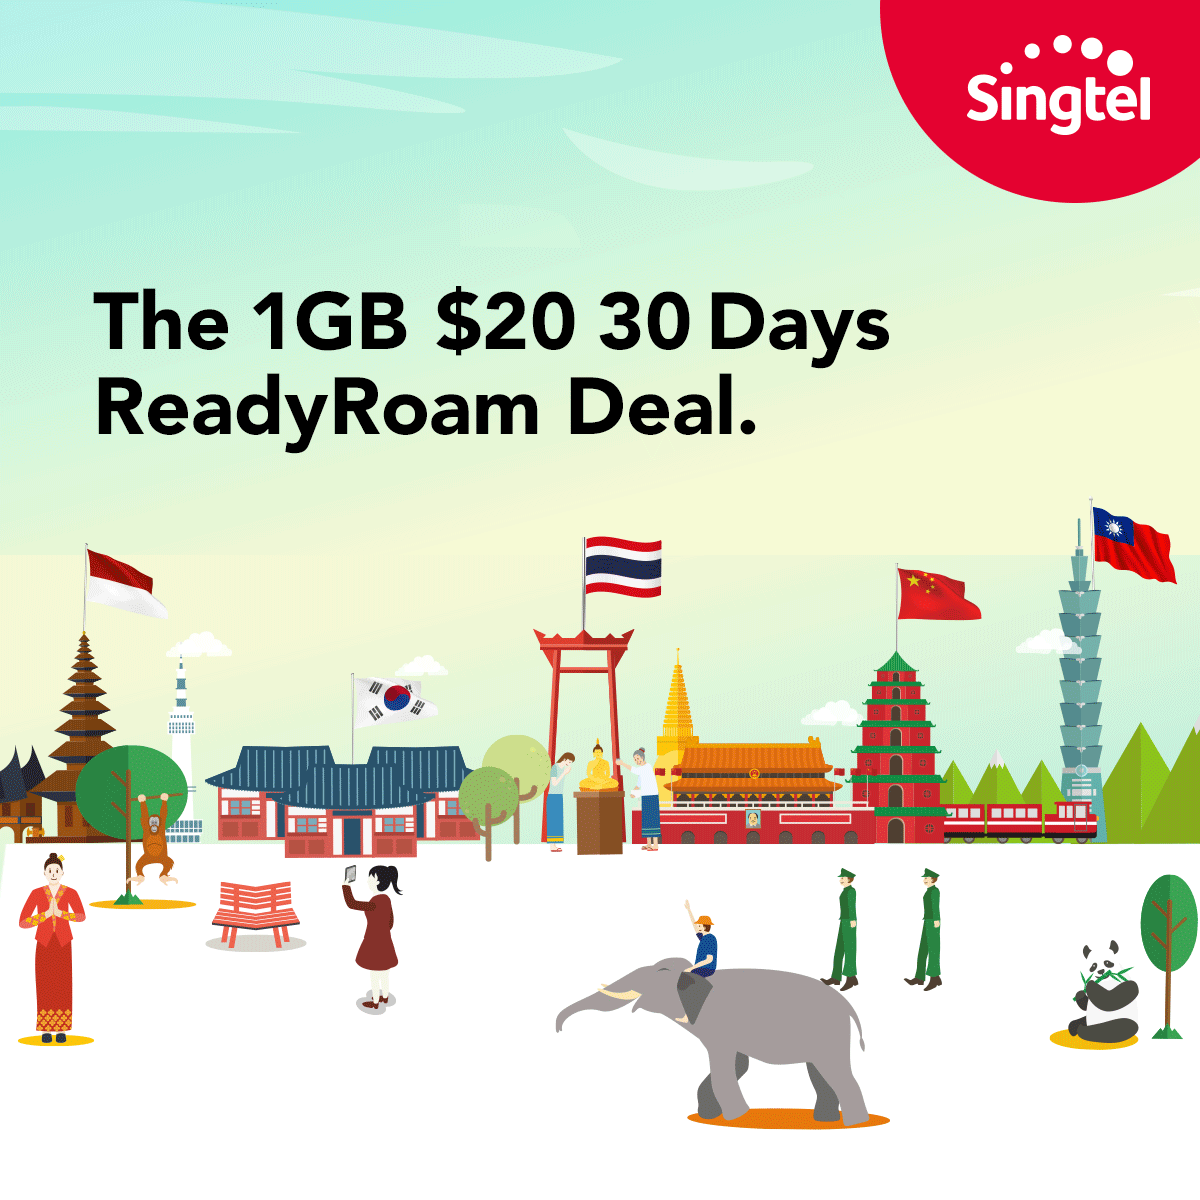 Singtel SG 1GB $20 30 Days ReadyRoam Deal 27 May to 30 Jun 2016